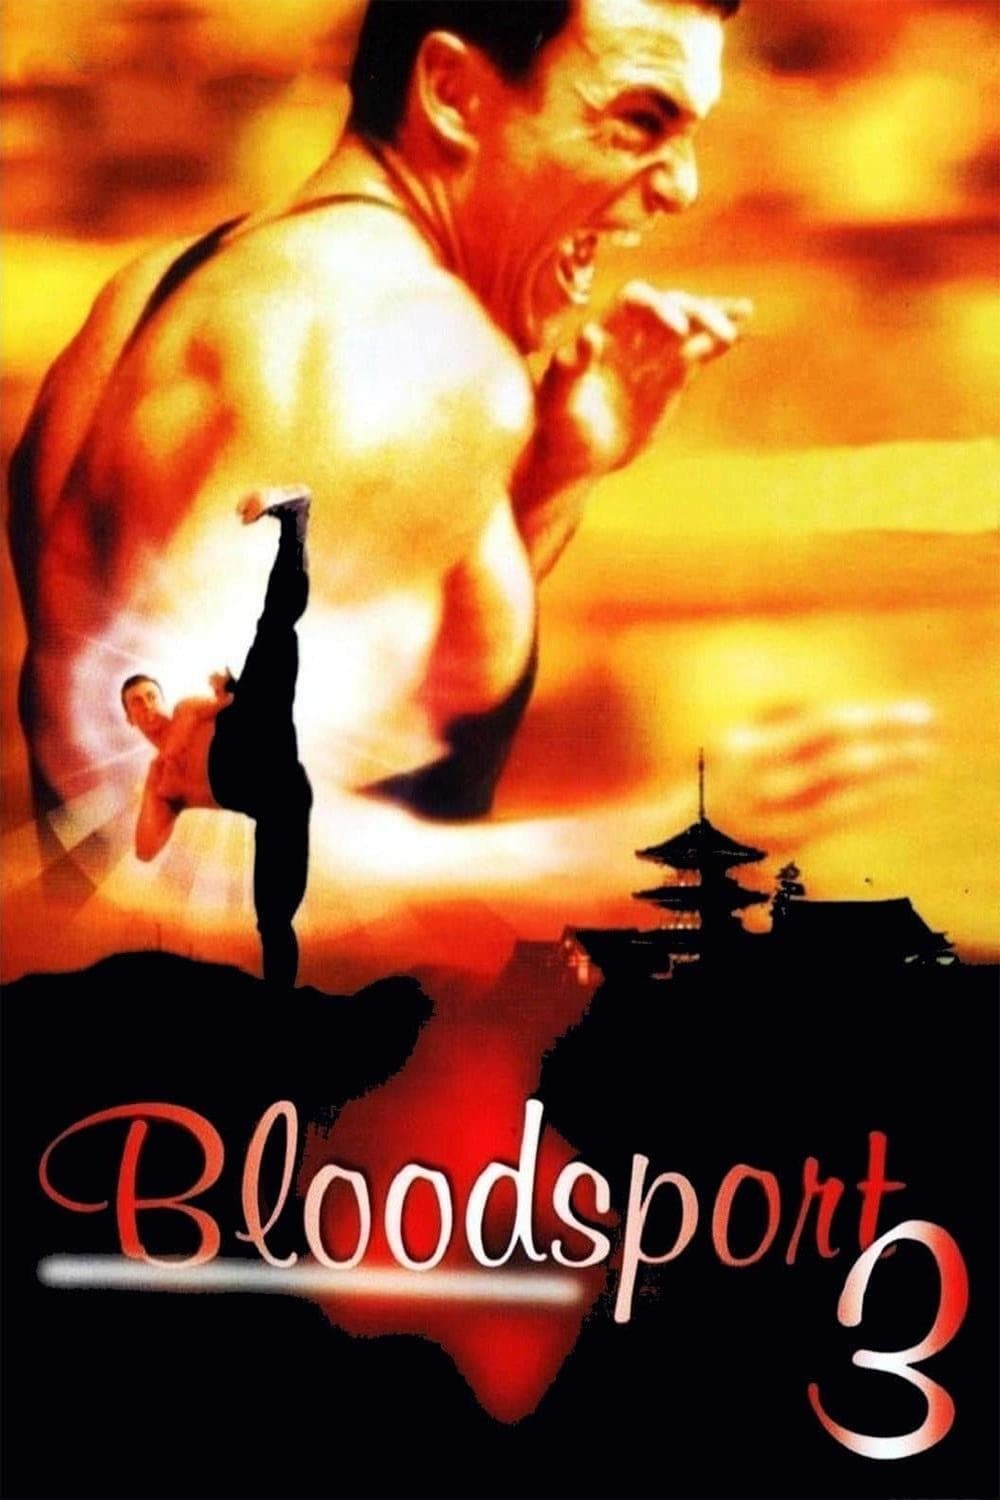 Bloodsport III (1996)